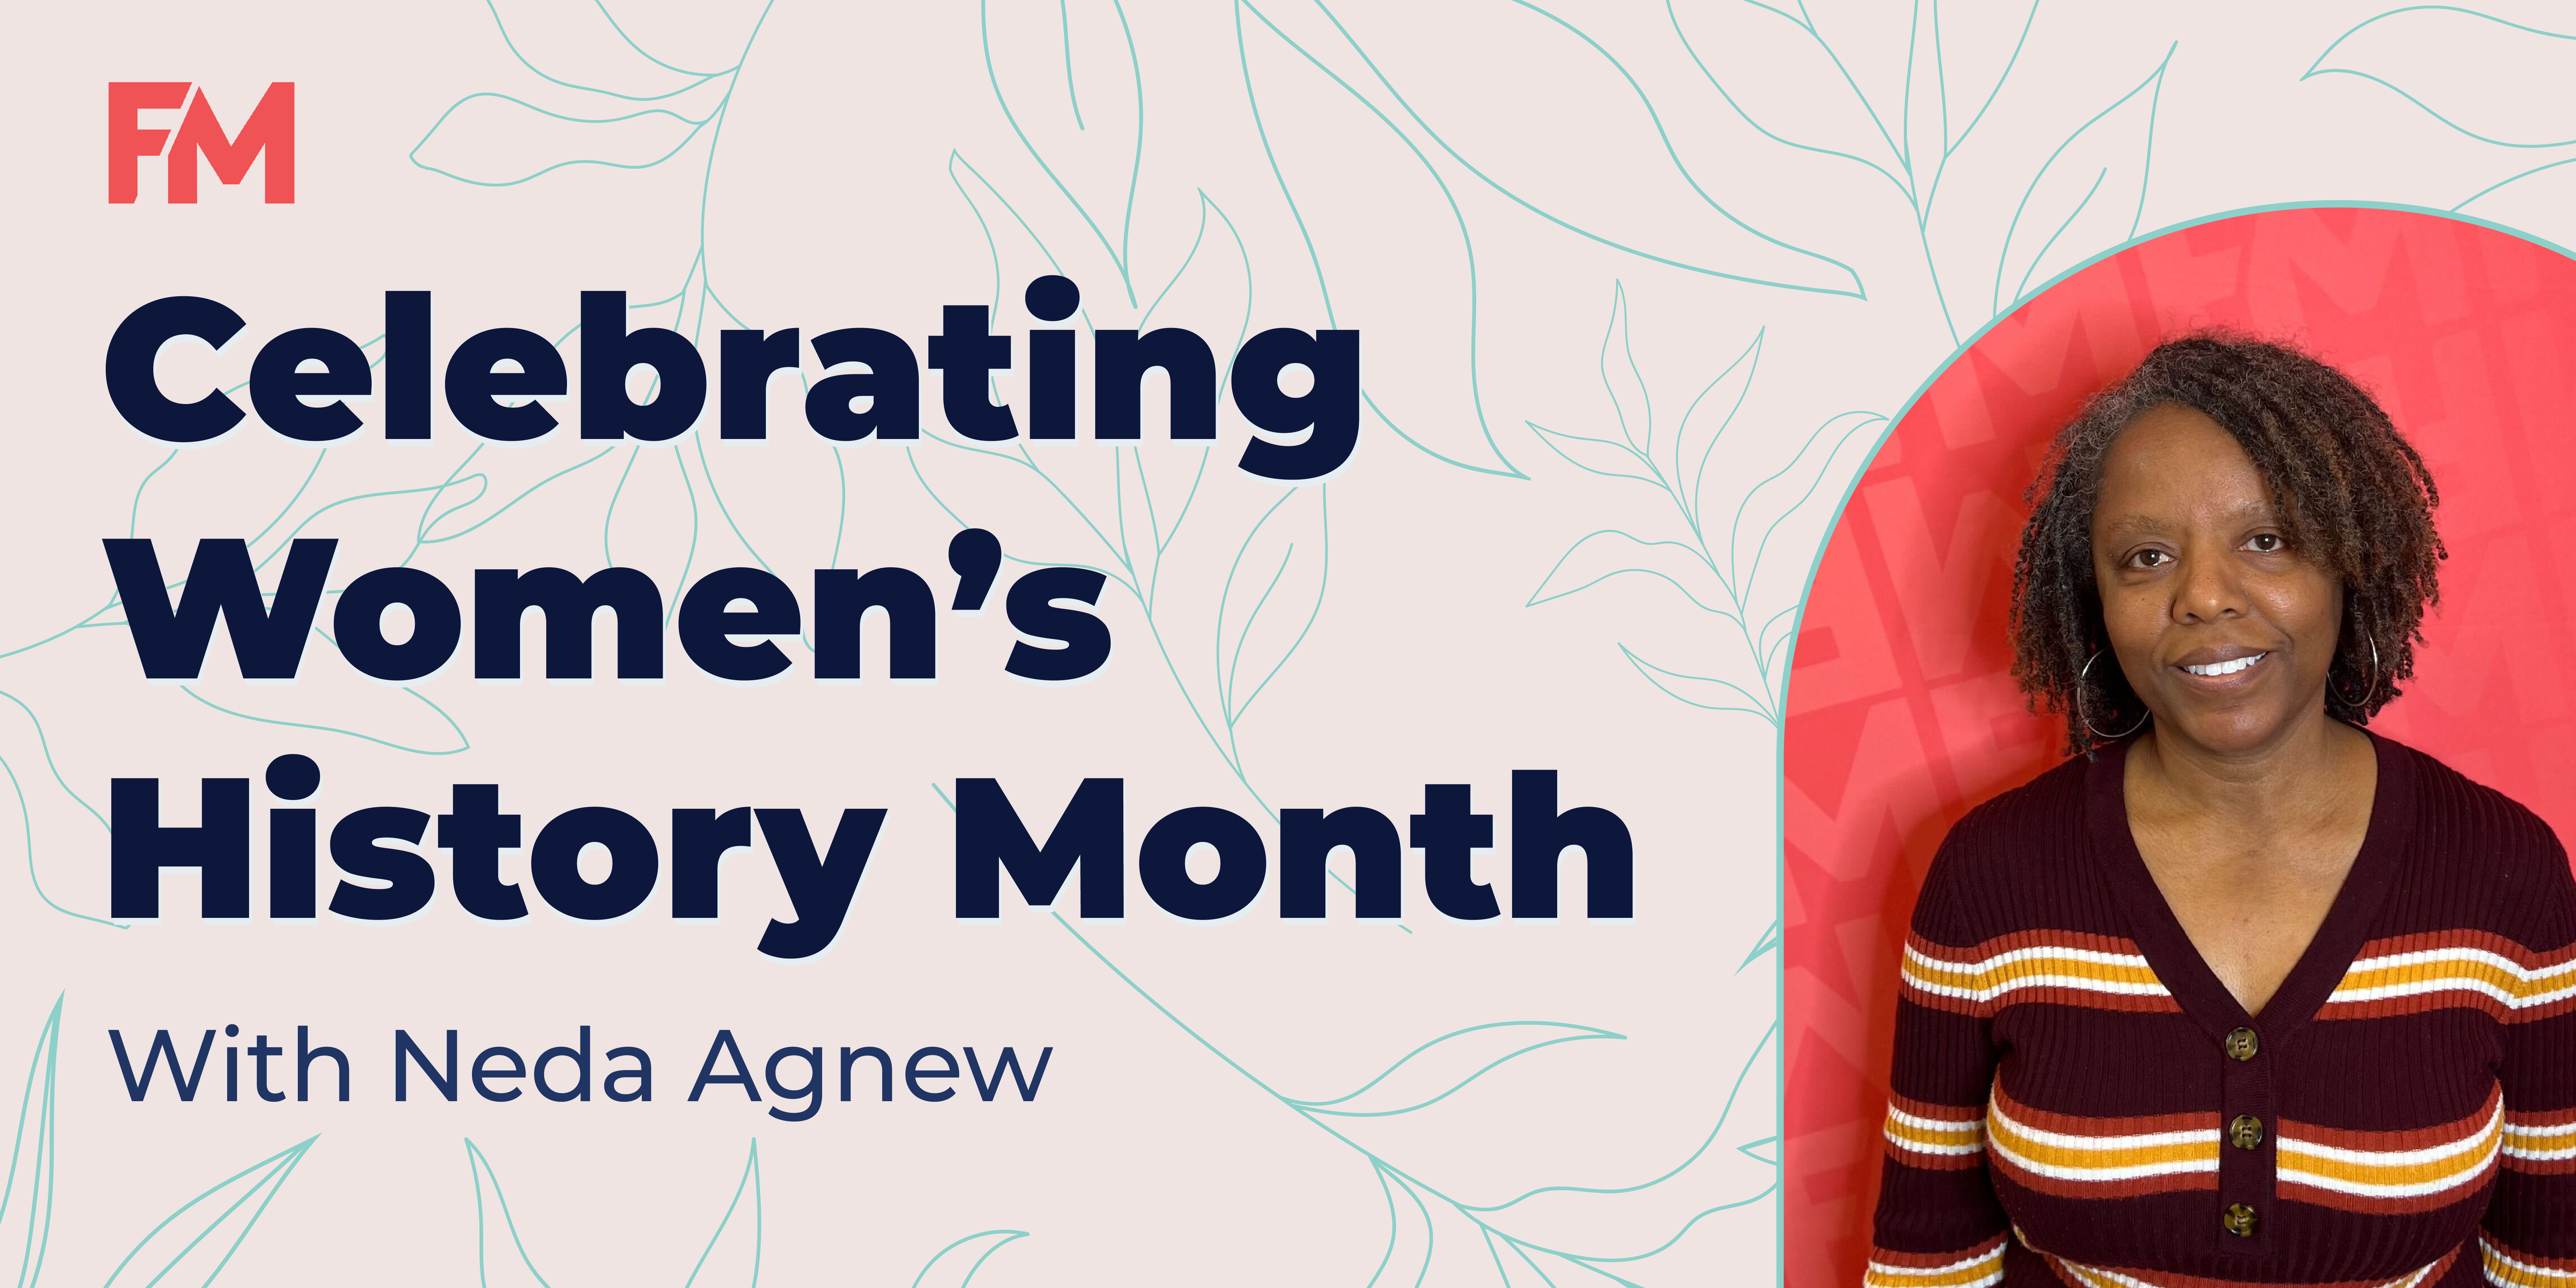 Women’s History Month - Neda Agnew